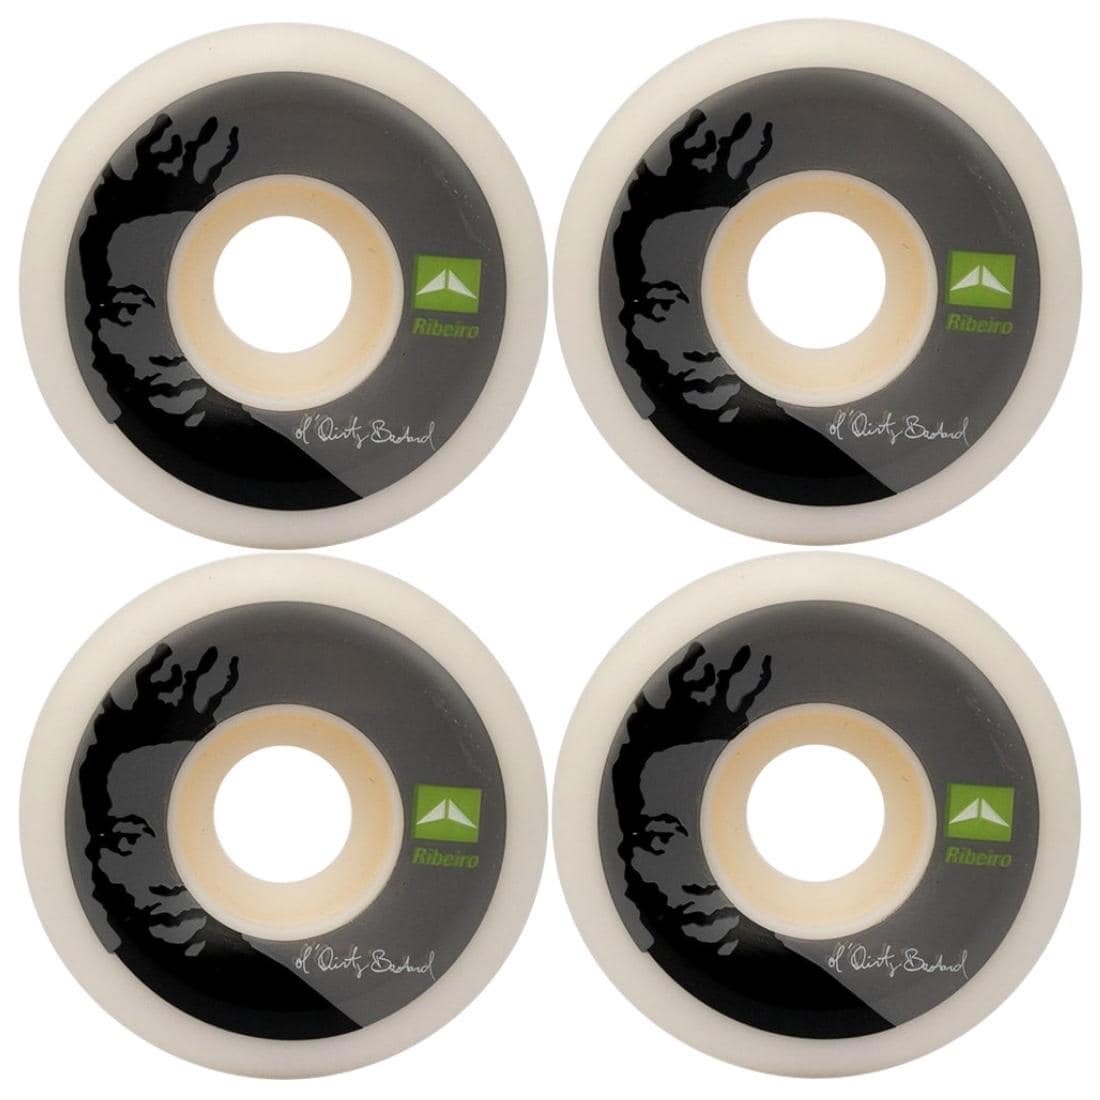 Crupie X ODB Carlos Ribeiro Wide Shape Skateboard Wheels - White - Skateboard Wheels by Crupie